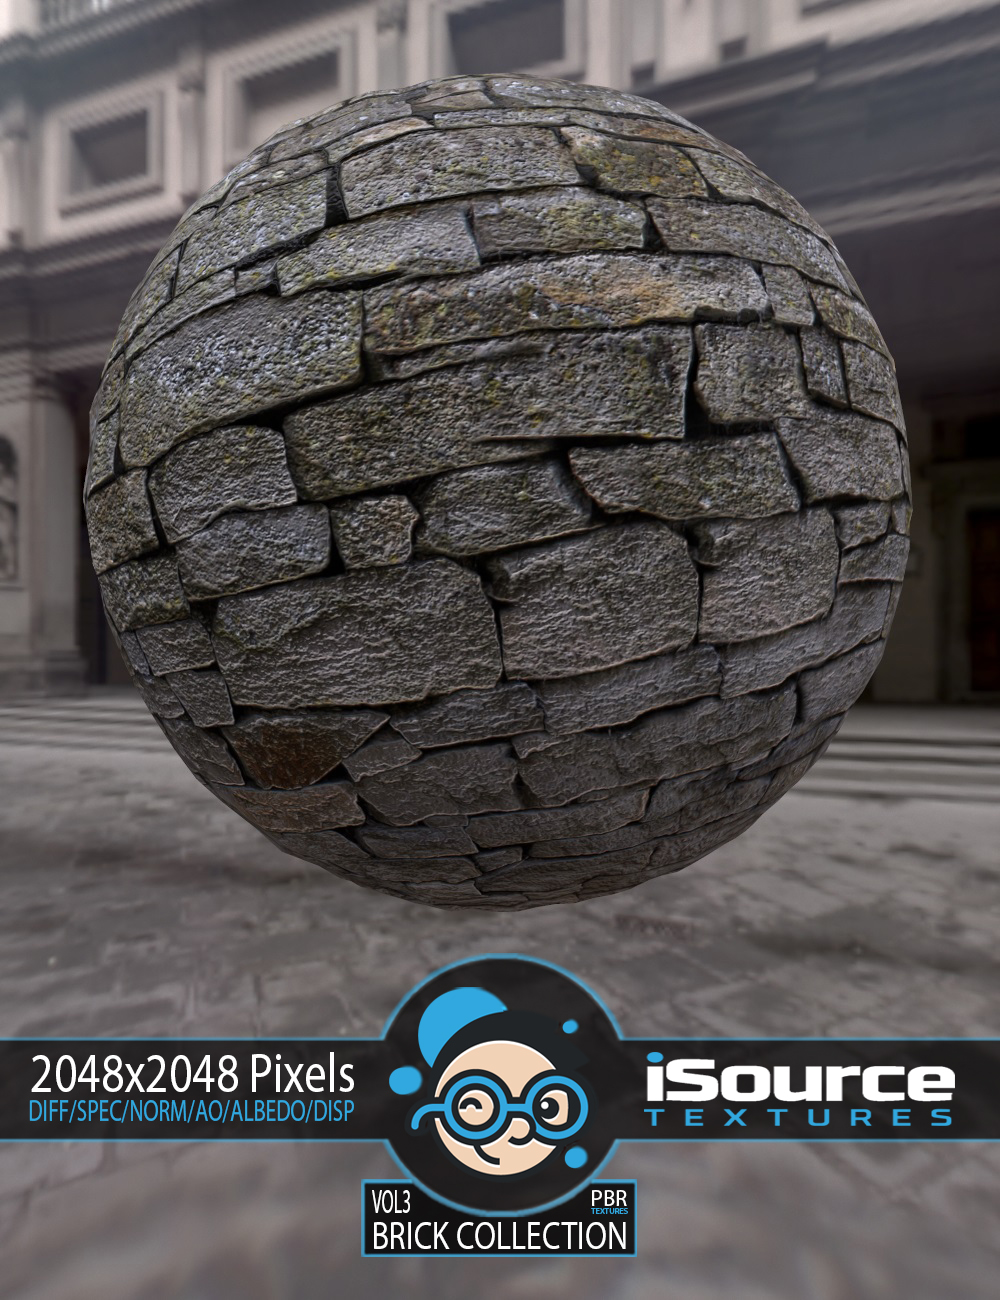 Brick Collection Merchant Resource - Vol3 (PBR Textures) by: iSourceTextures, 3D Models by Daz 3D